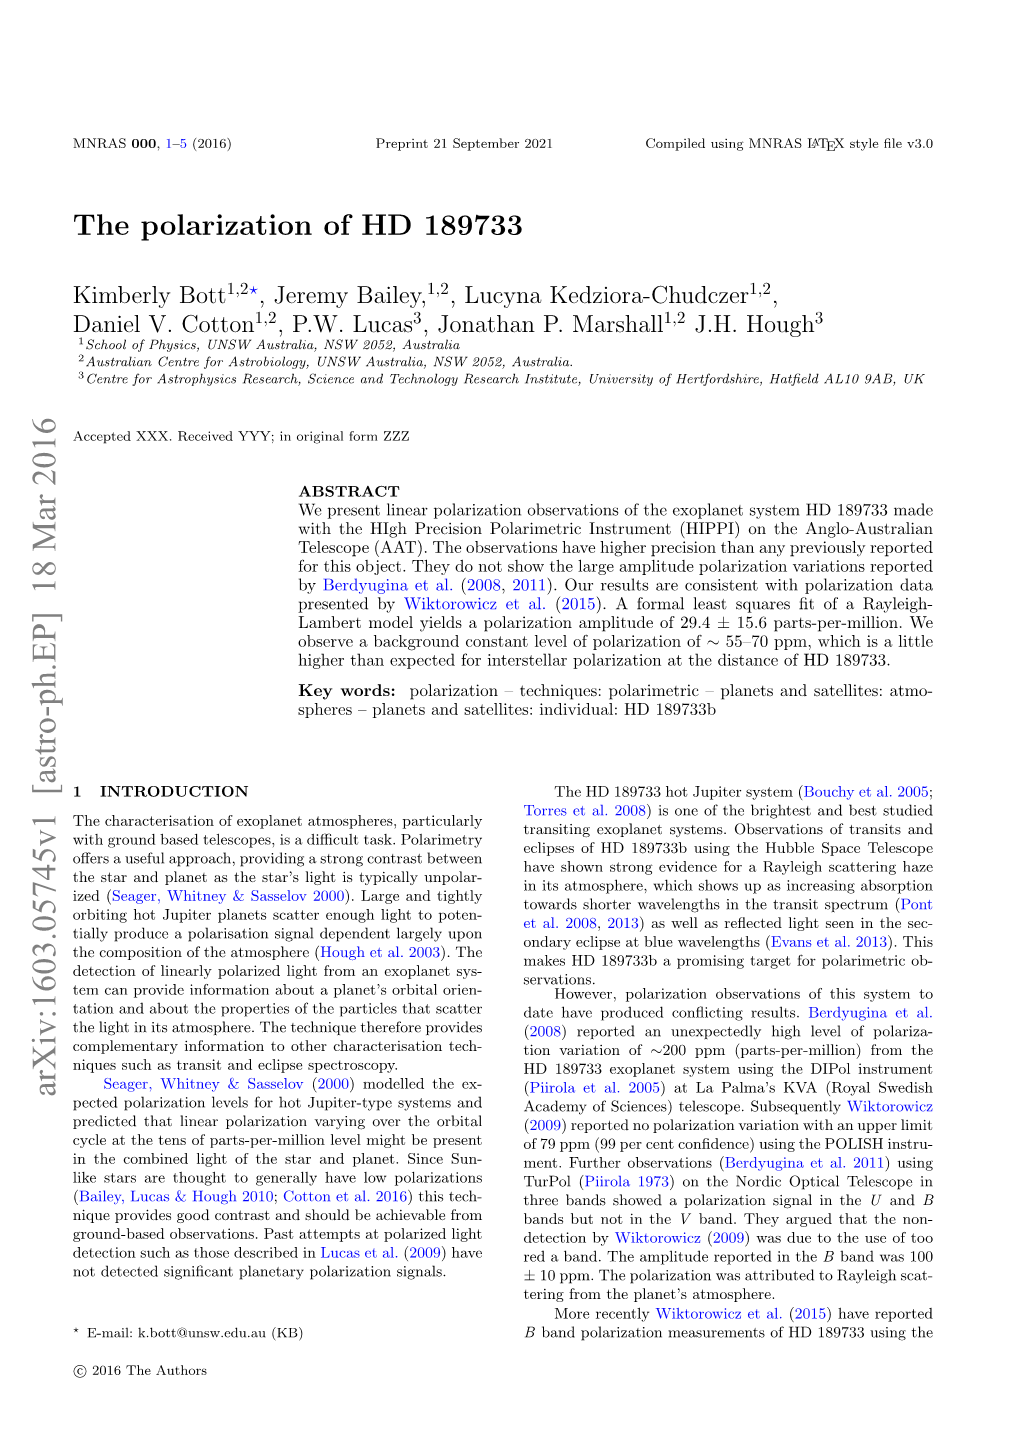 The Polarization of HD 189733